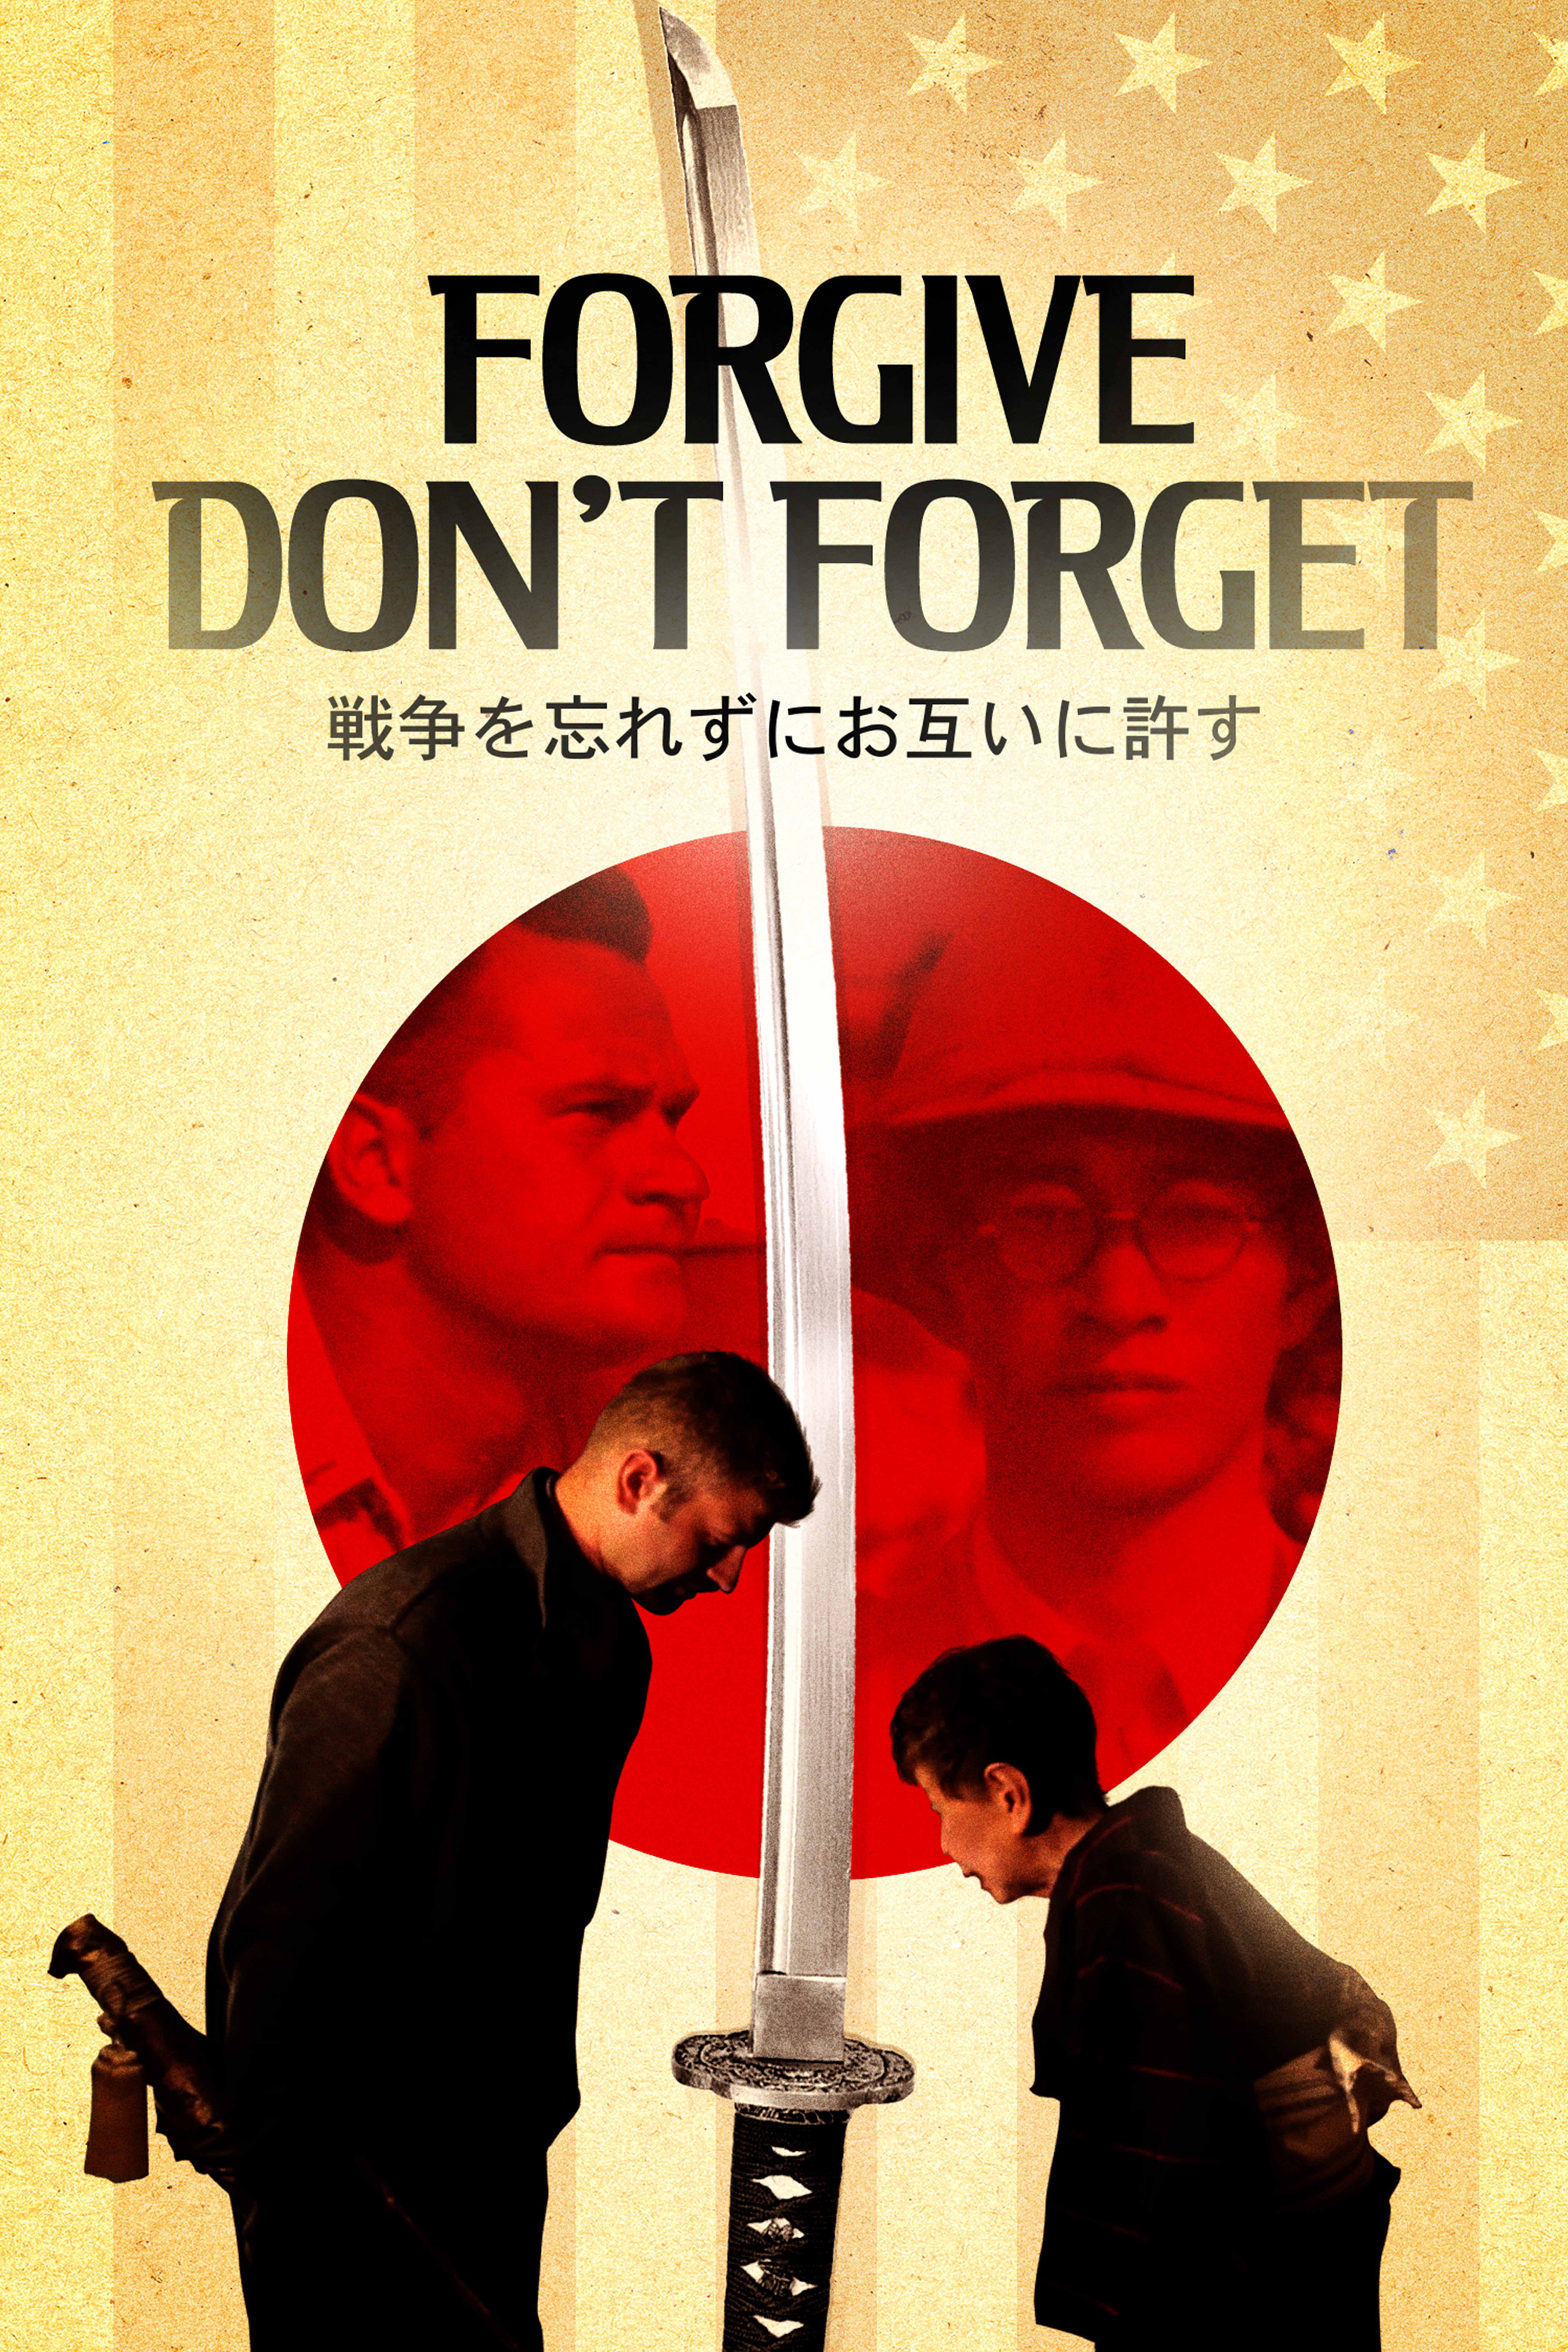 Nonton film Forgive – Dont Forget layarkaca21 indoxx1 ganool online streaming terbaru